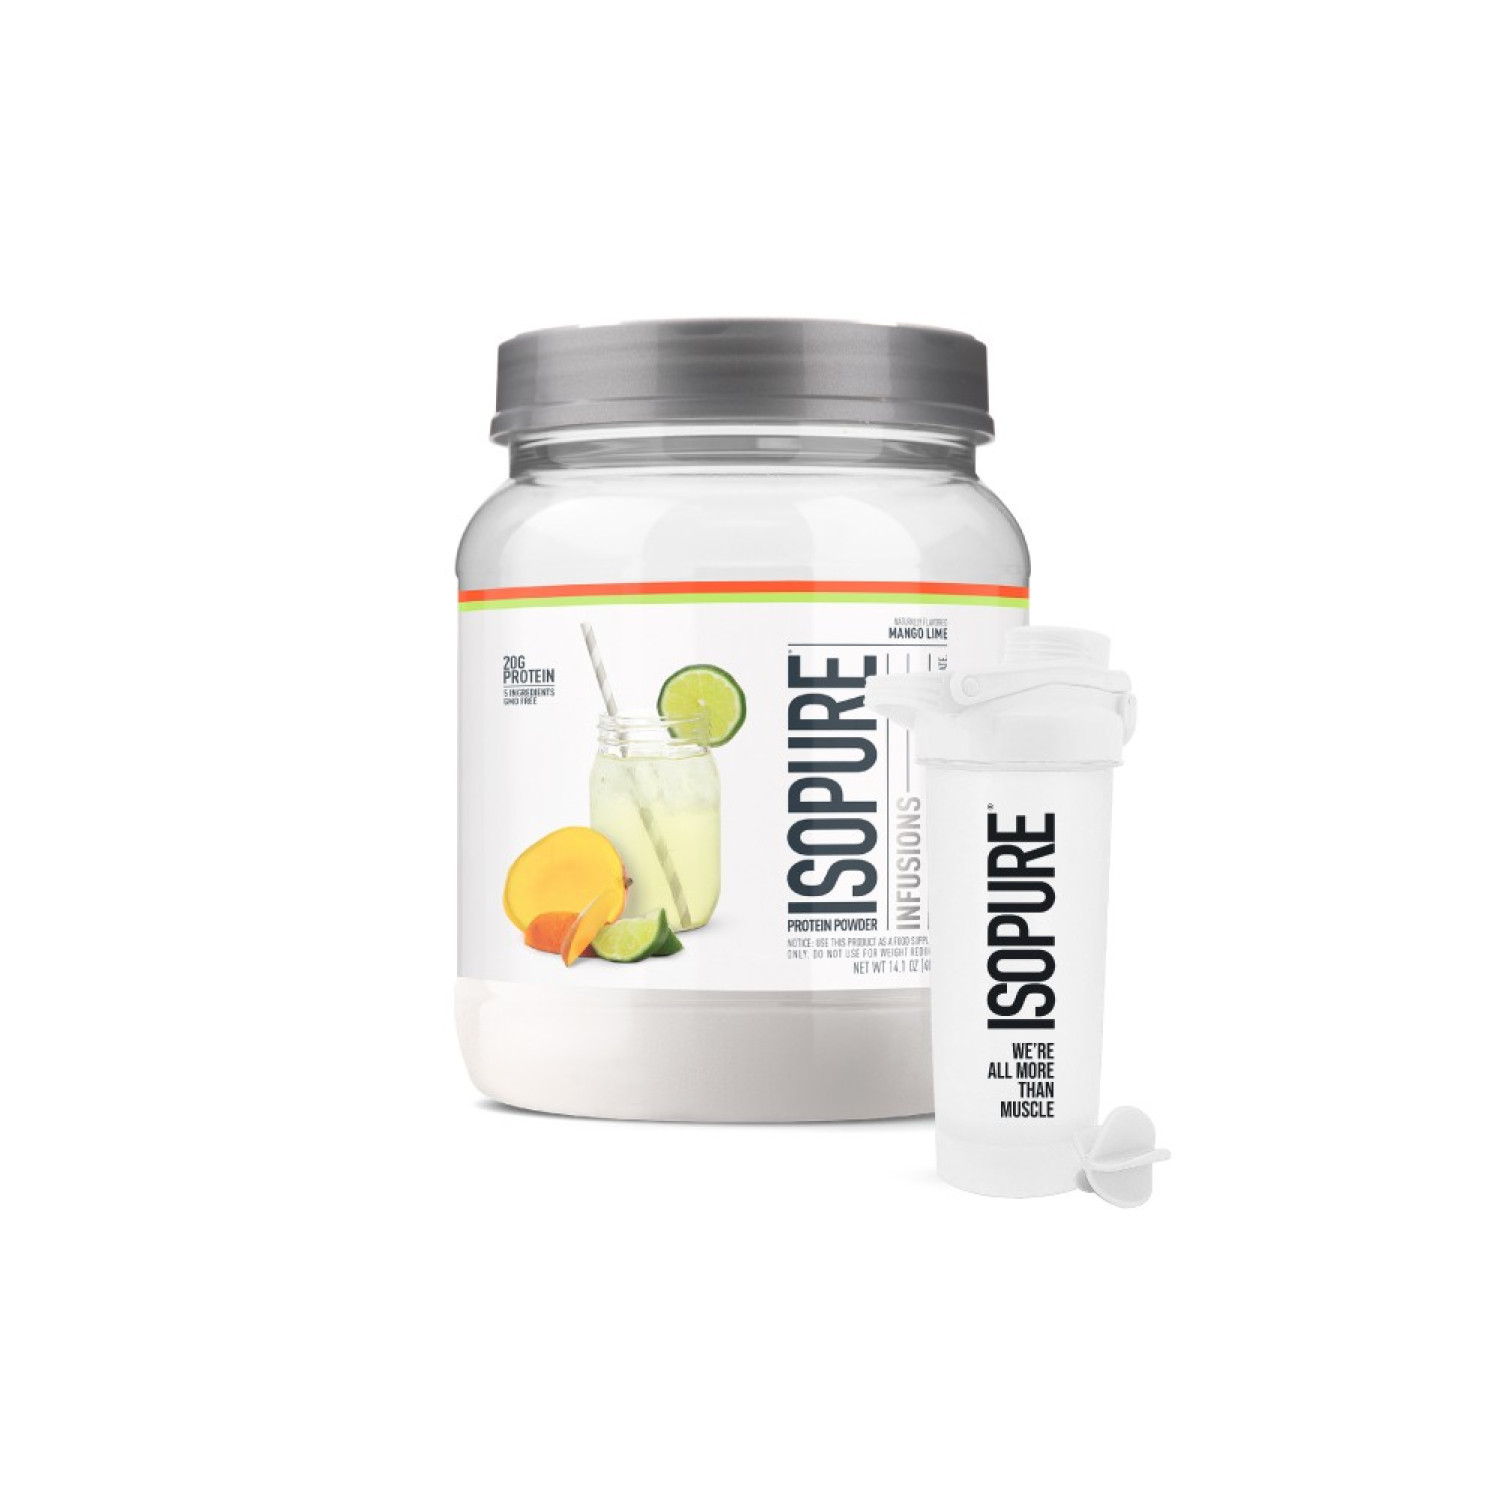 isopure-infusions-088-lb-mango-lime-400g-65694594b3fac.jpeg